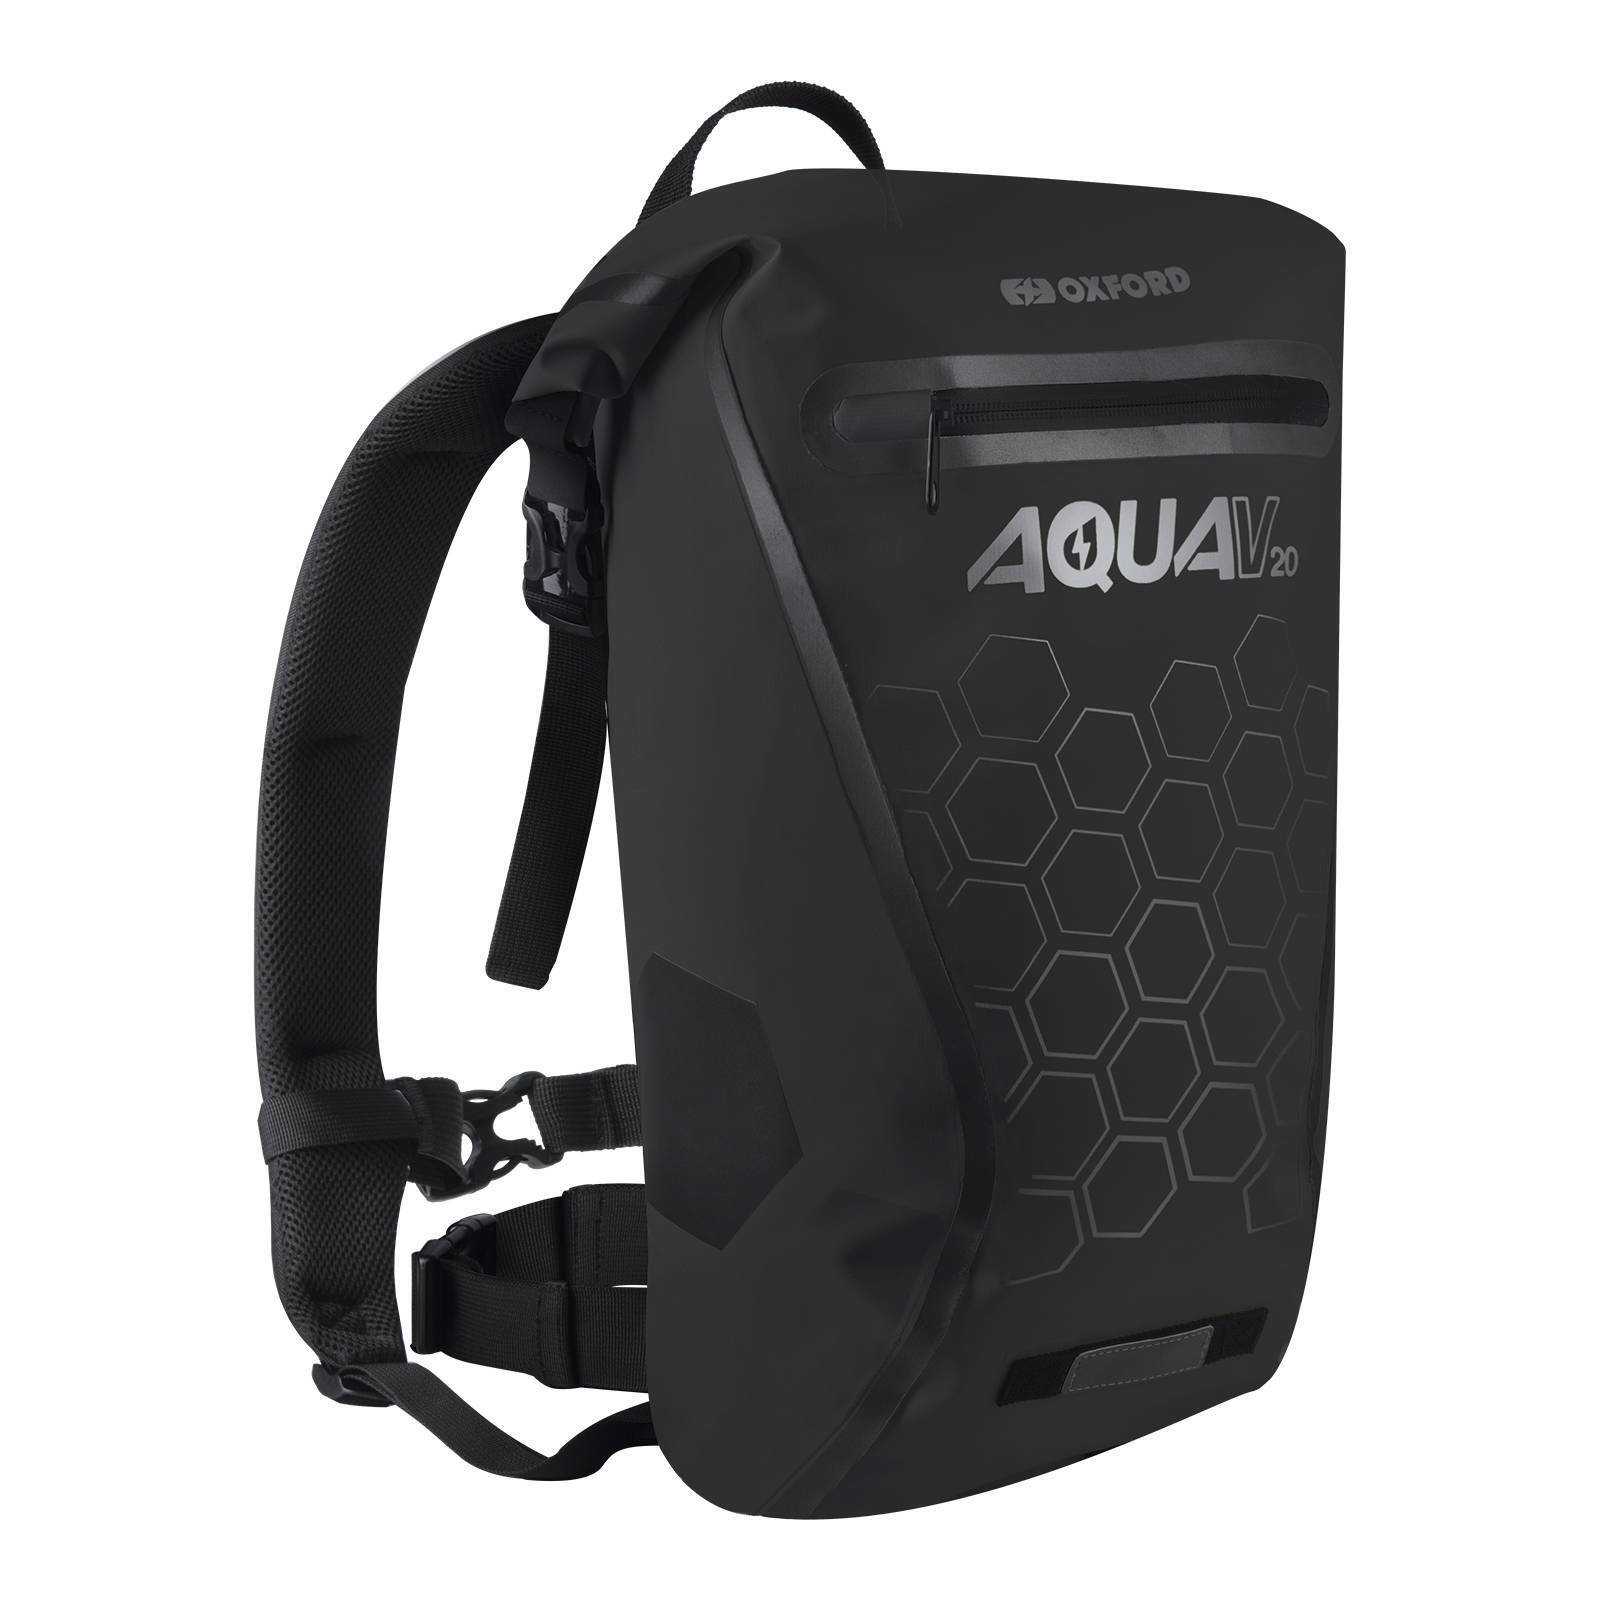 Oxford Backpack Aqua V20